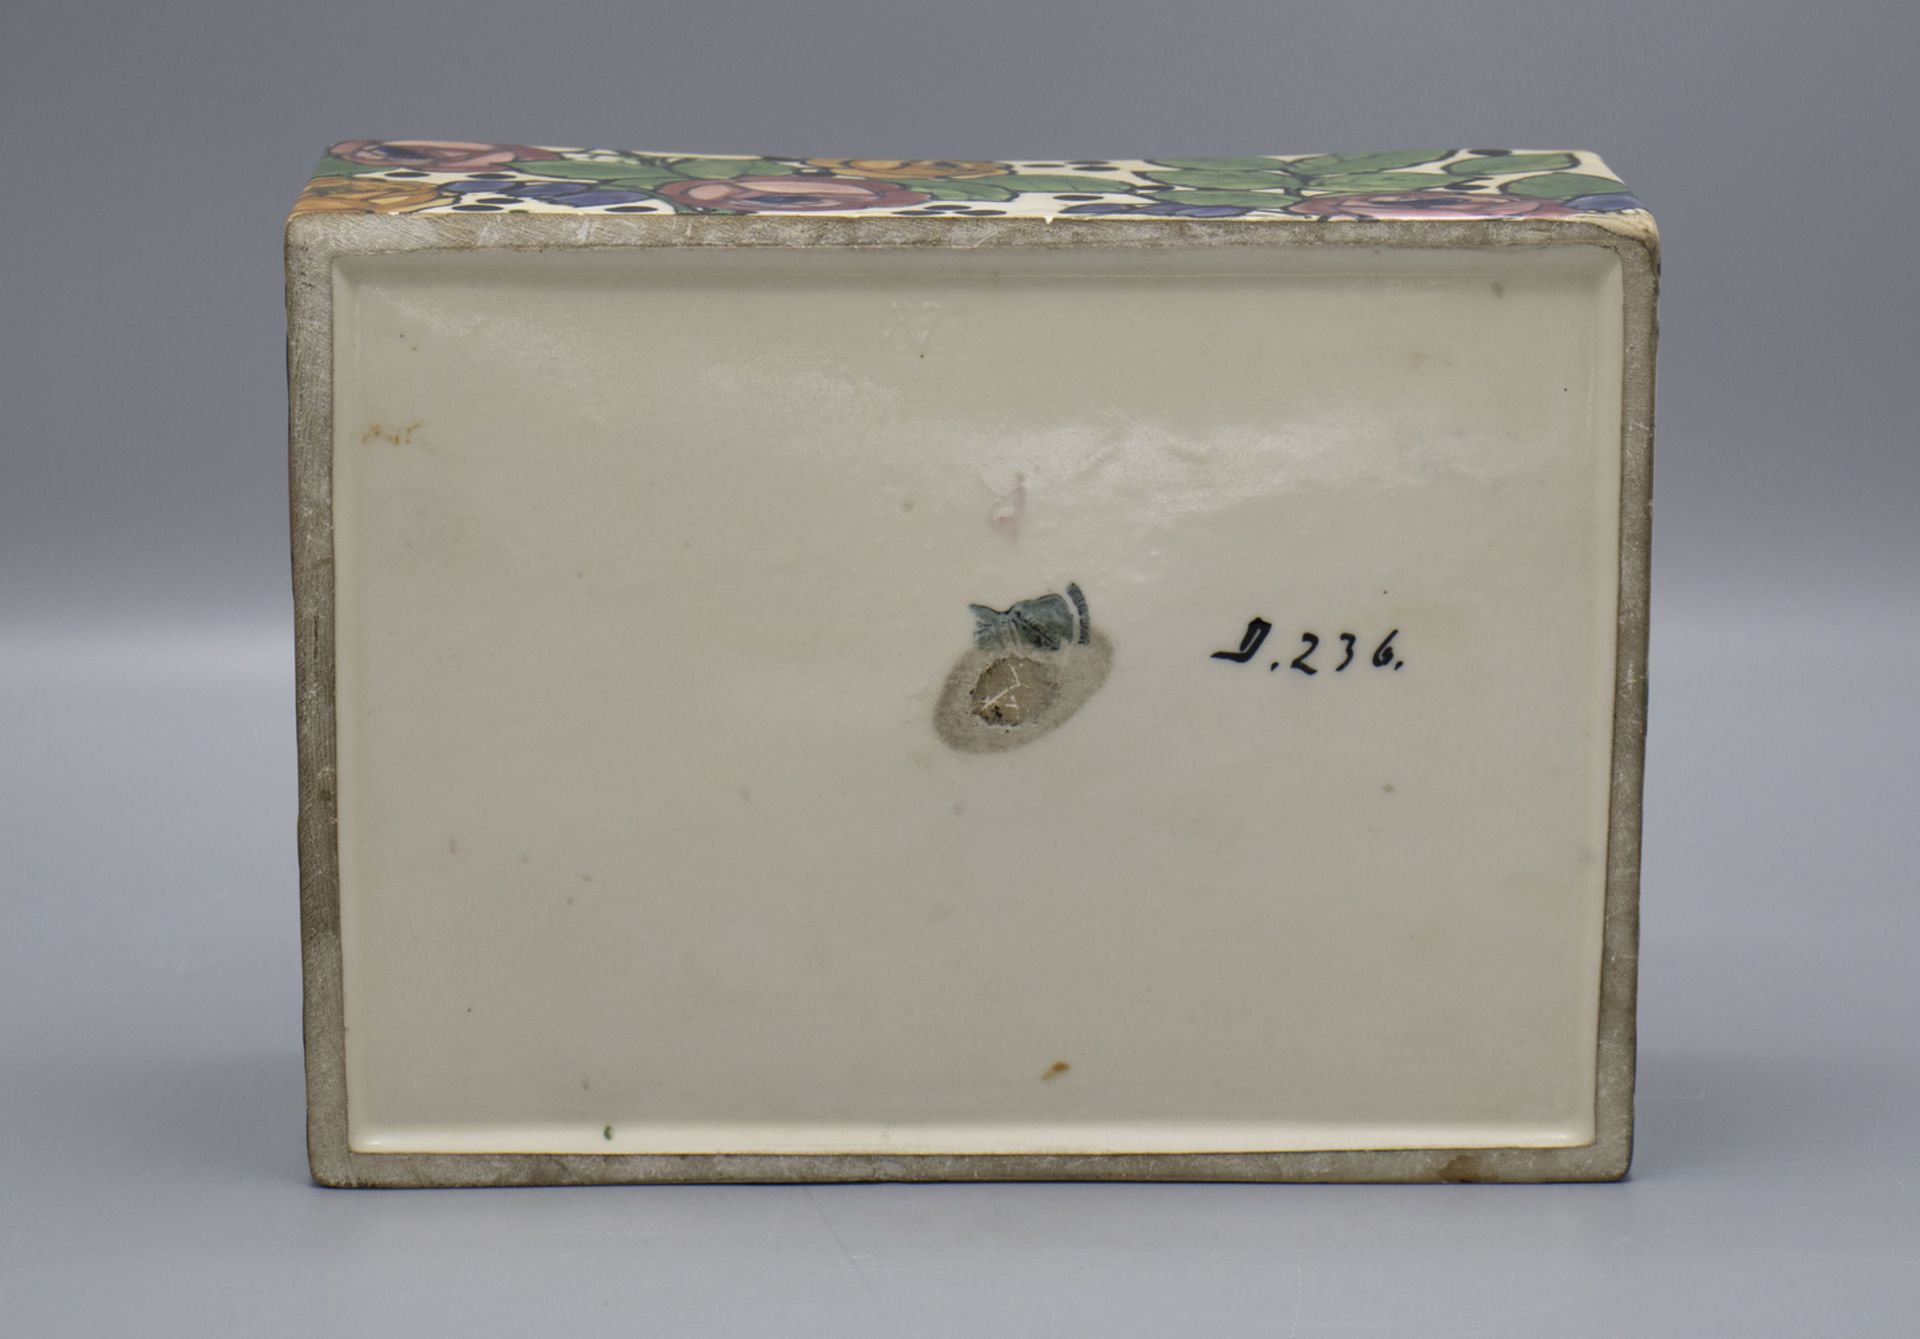 Keramik Deckeldose / A ceramic lidded box, um 1900 - Bild 4 aus 4